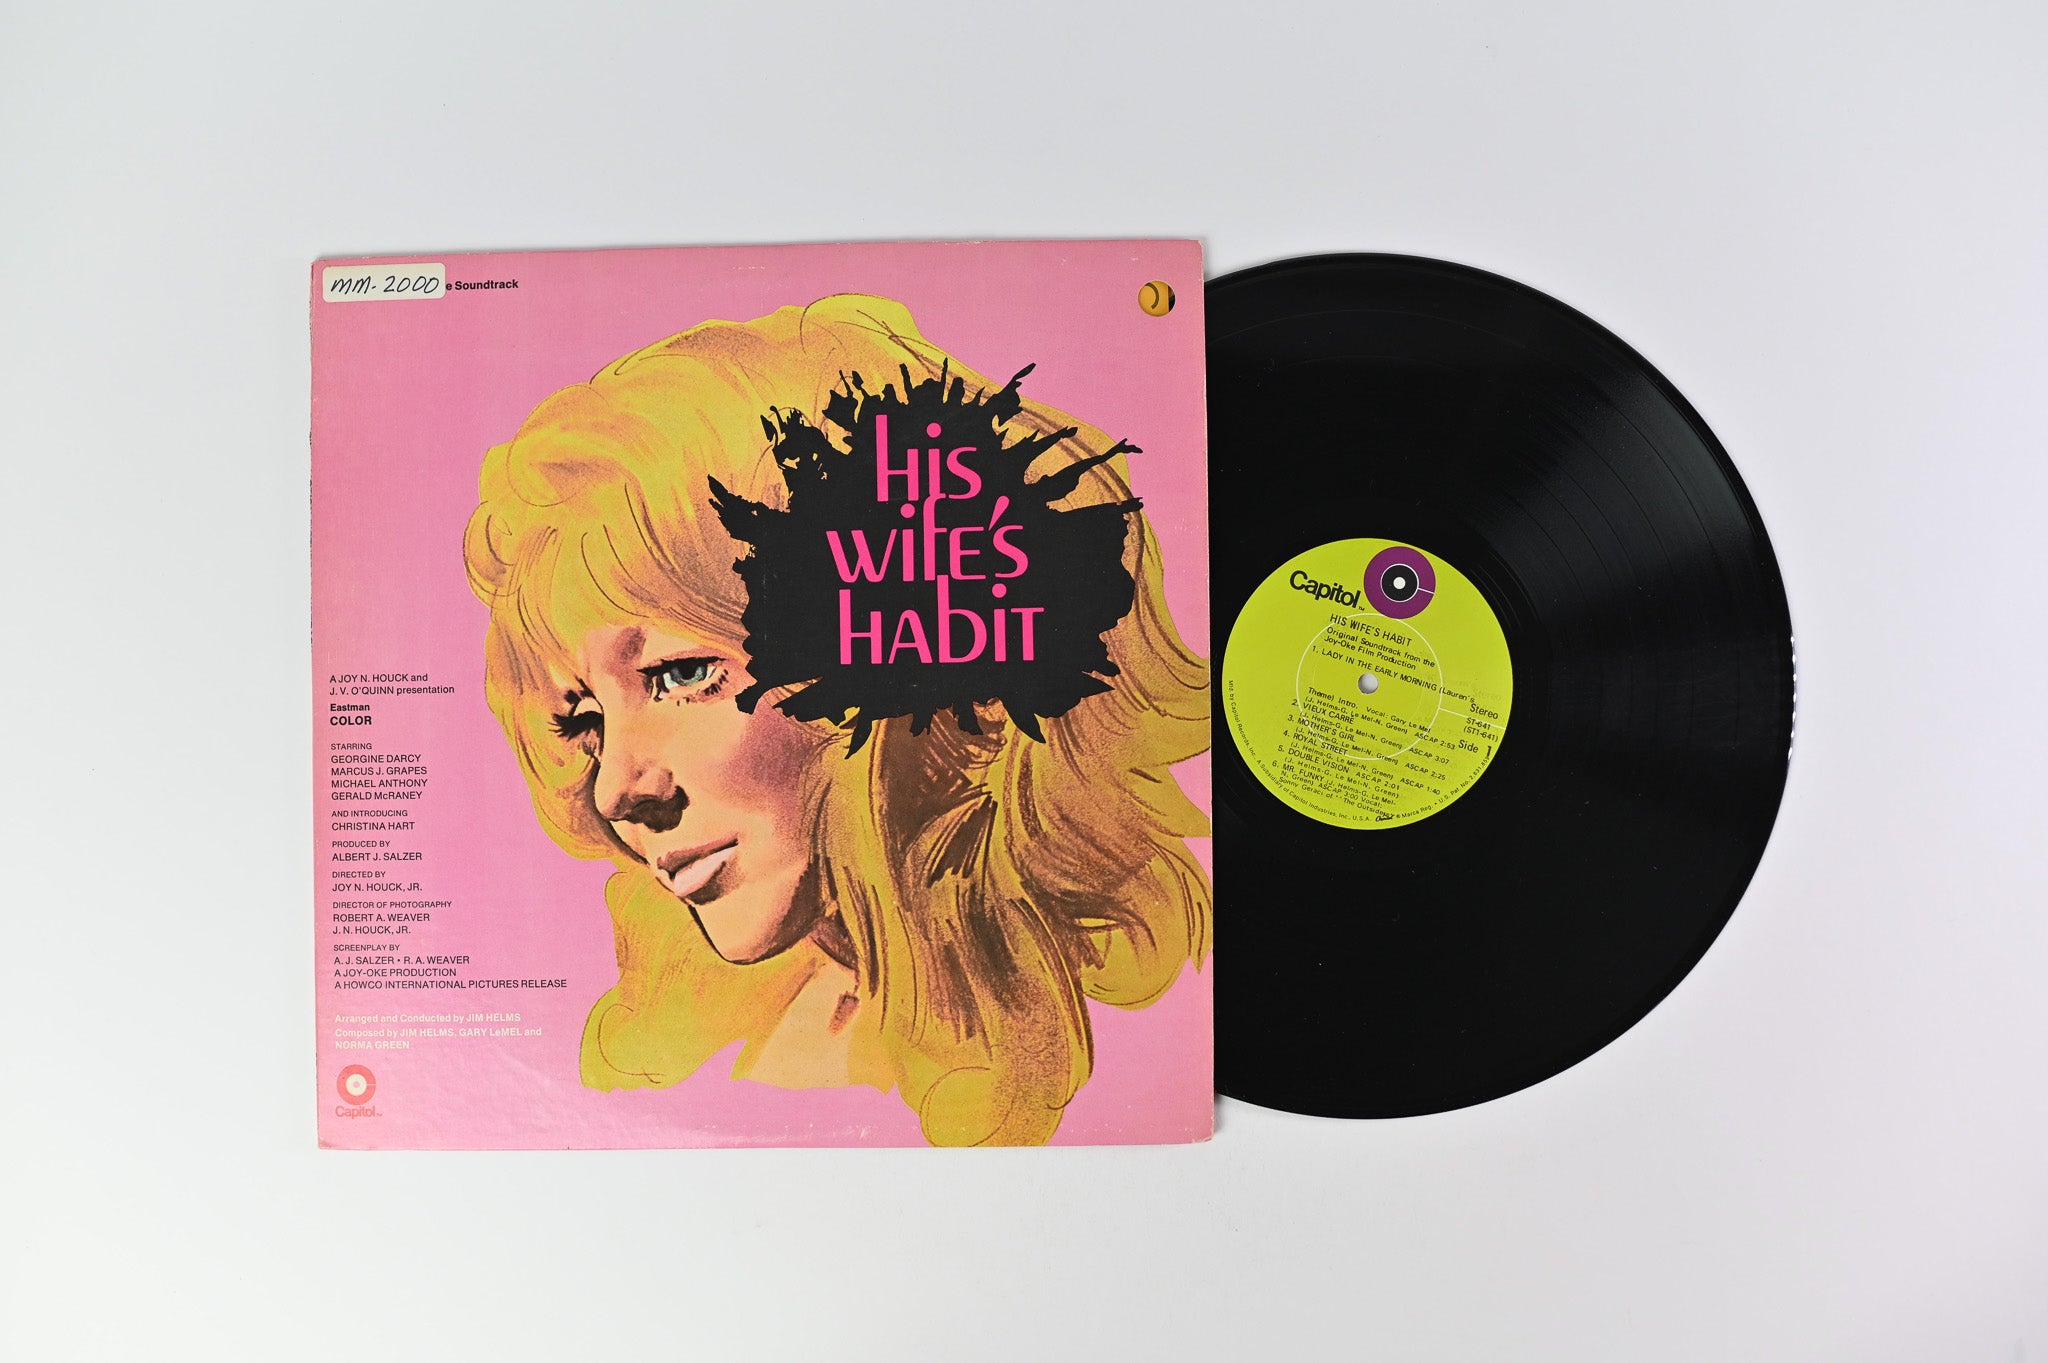 Jim Helms - His Wife's Habit (Original Motion Picture Soundtrack) on Capitol Records